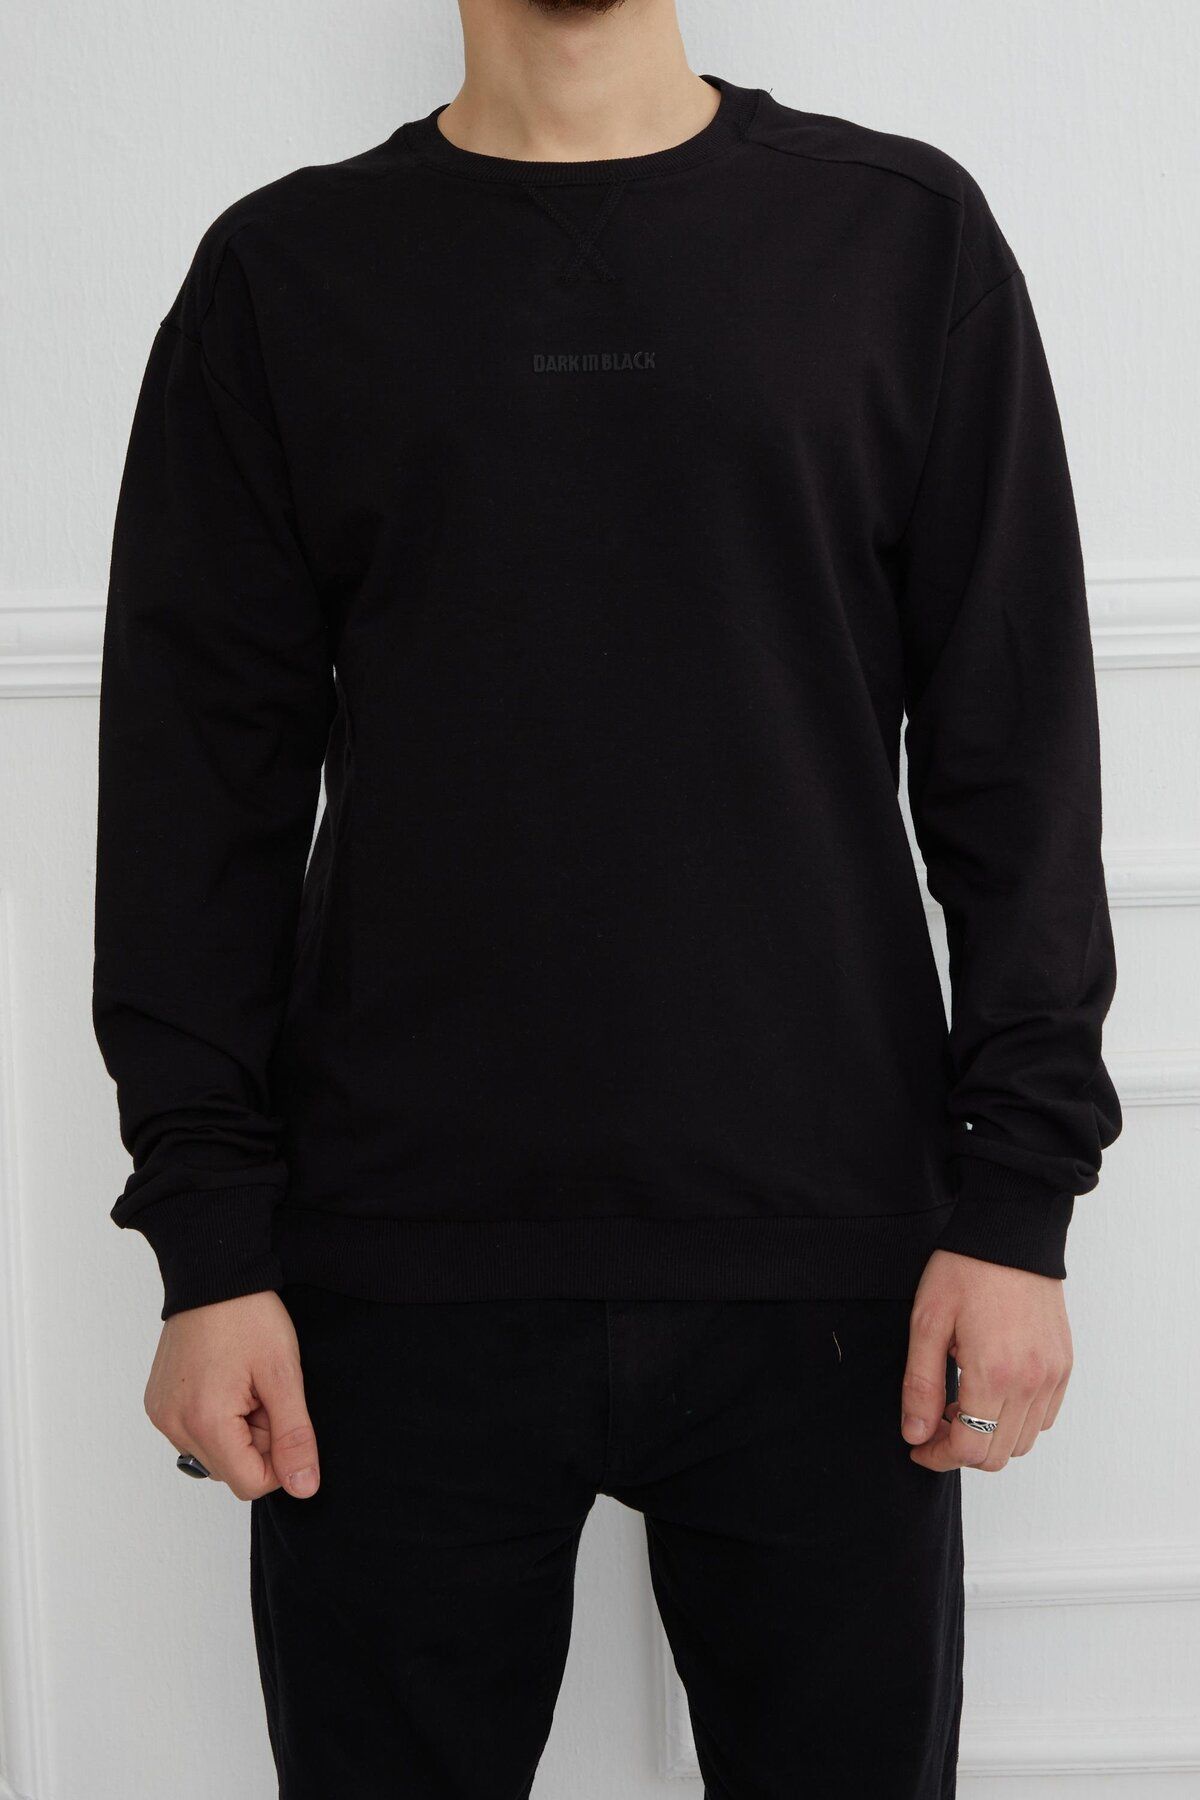 Five Pocket Hscstore Erkek Baskılı Basic Siyah Sweatshirt - 6016